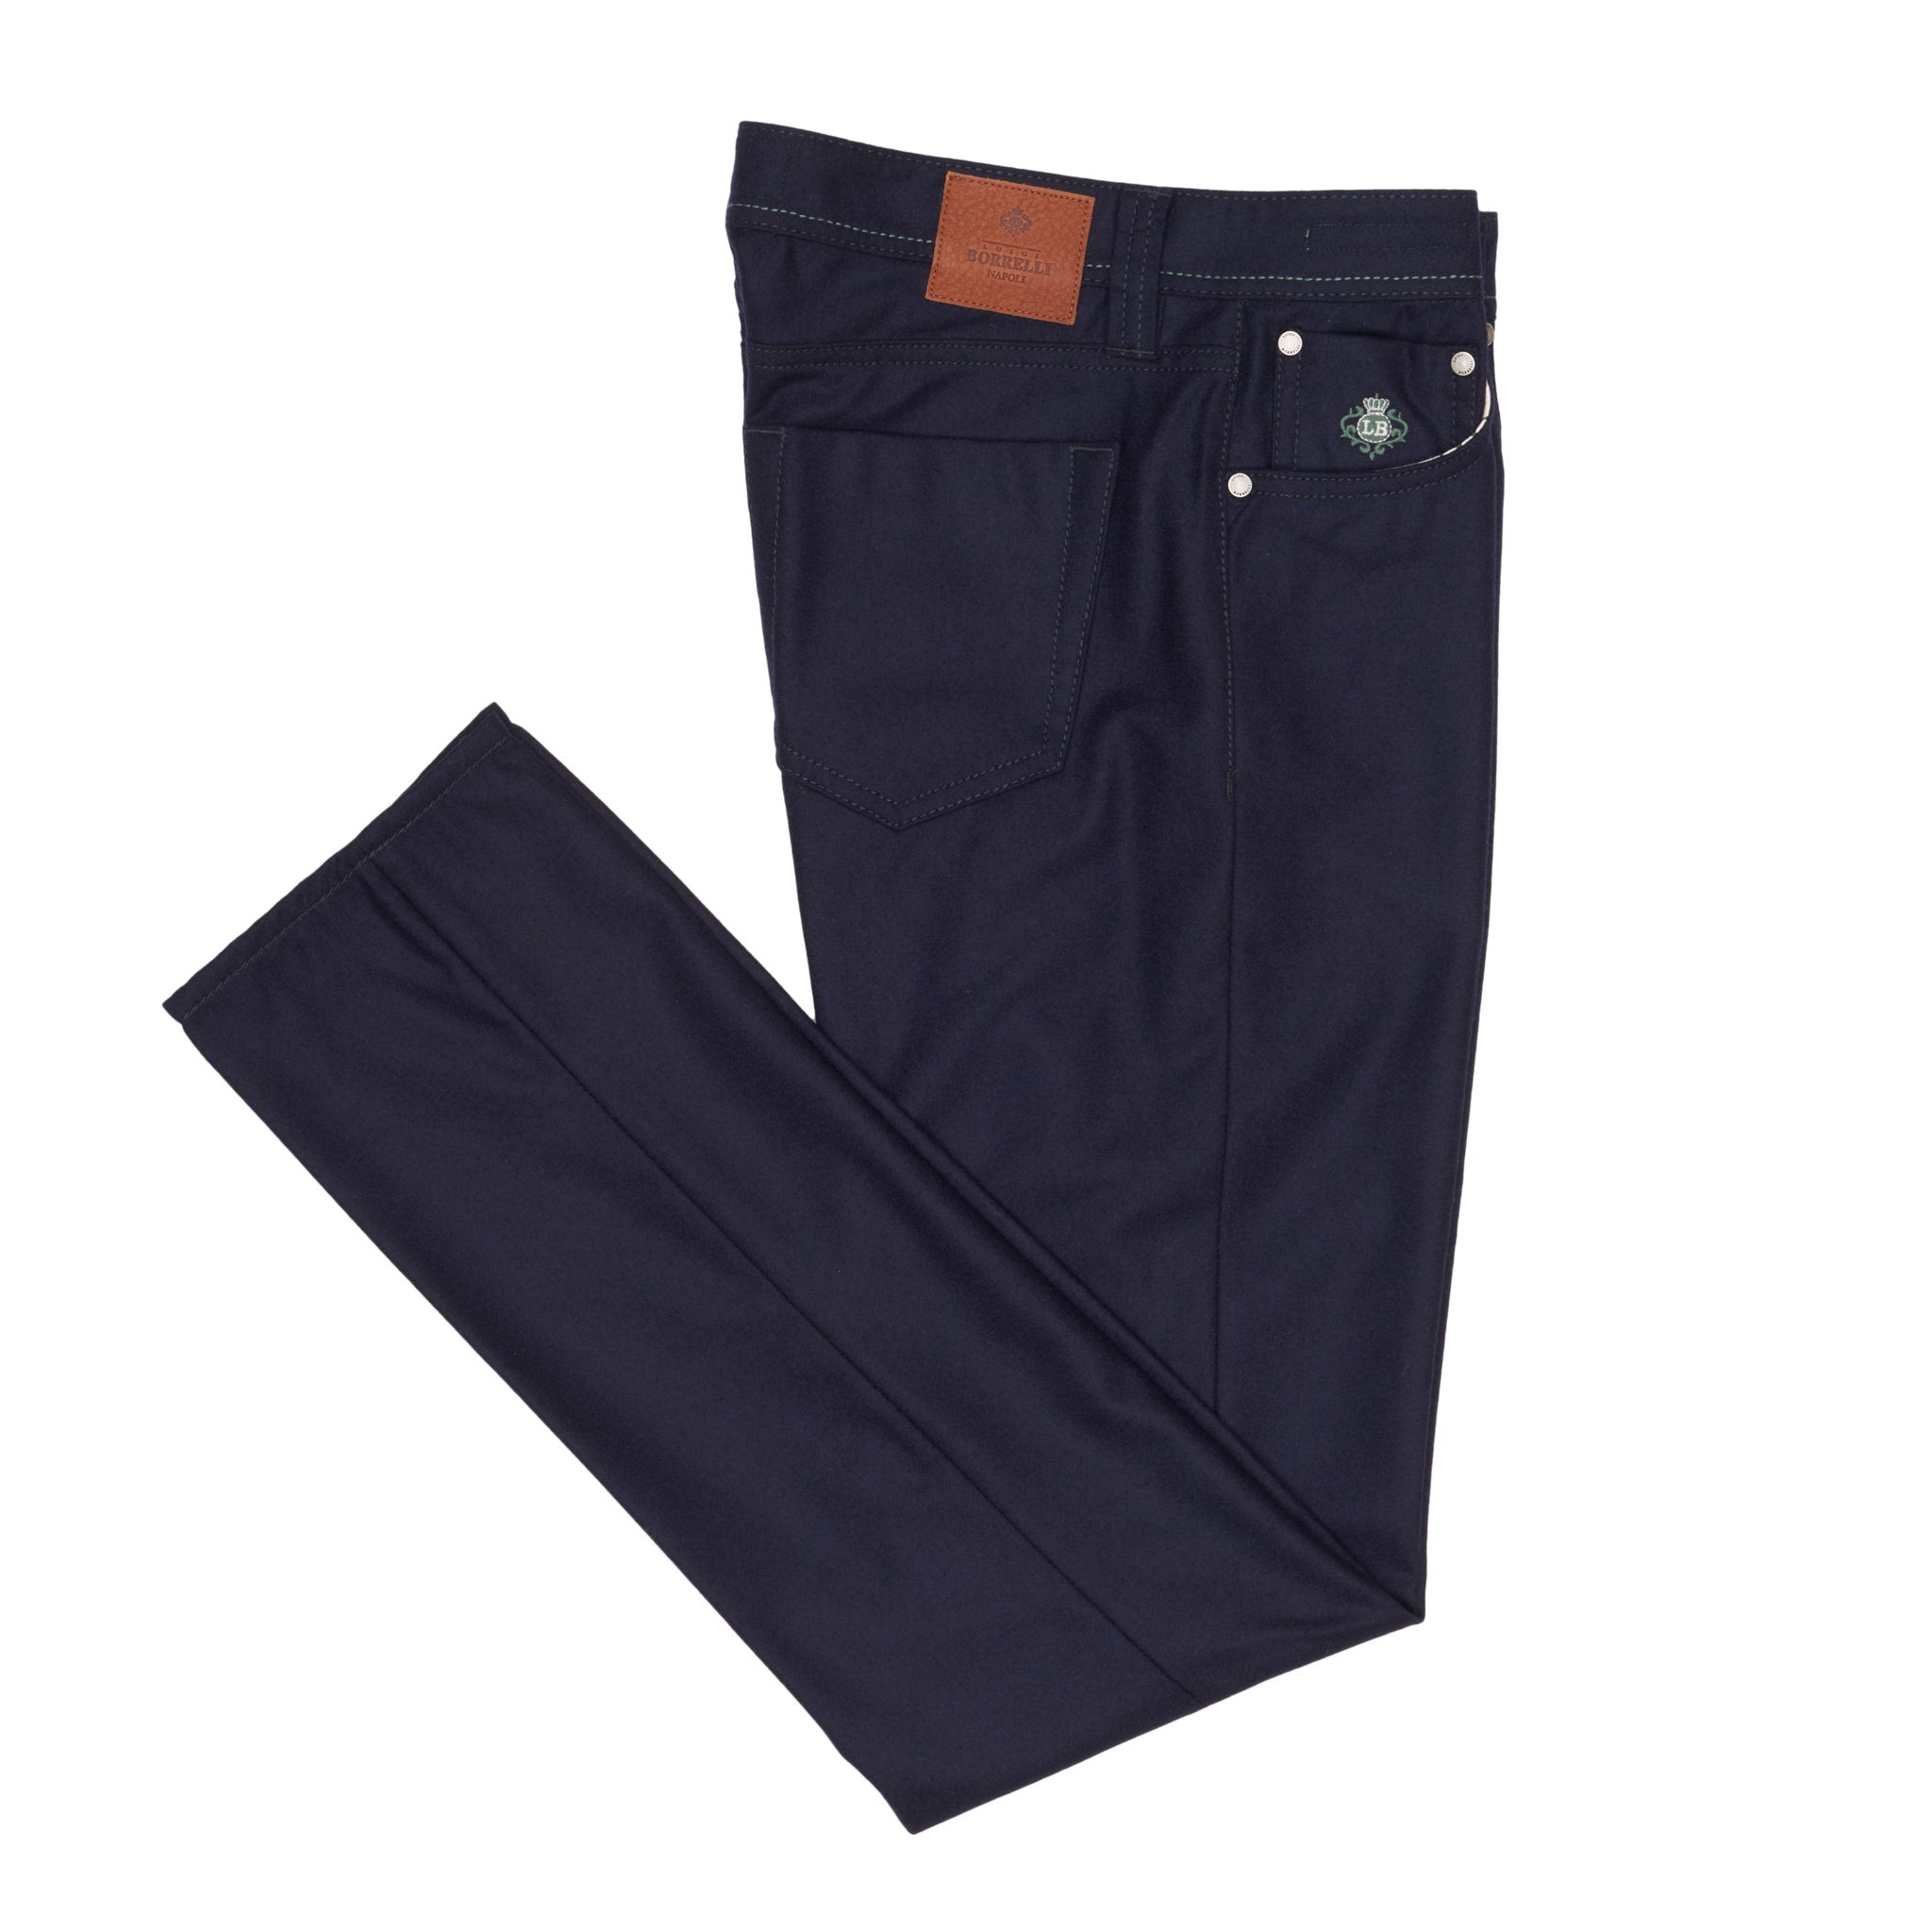 LUIGI BORRELLI Napoli "Caracciolo-LB" Navy Blue Wool Flannel Jeans Pants NEW